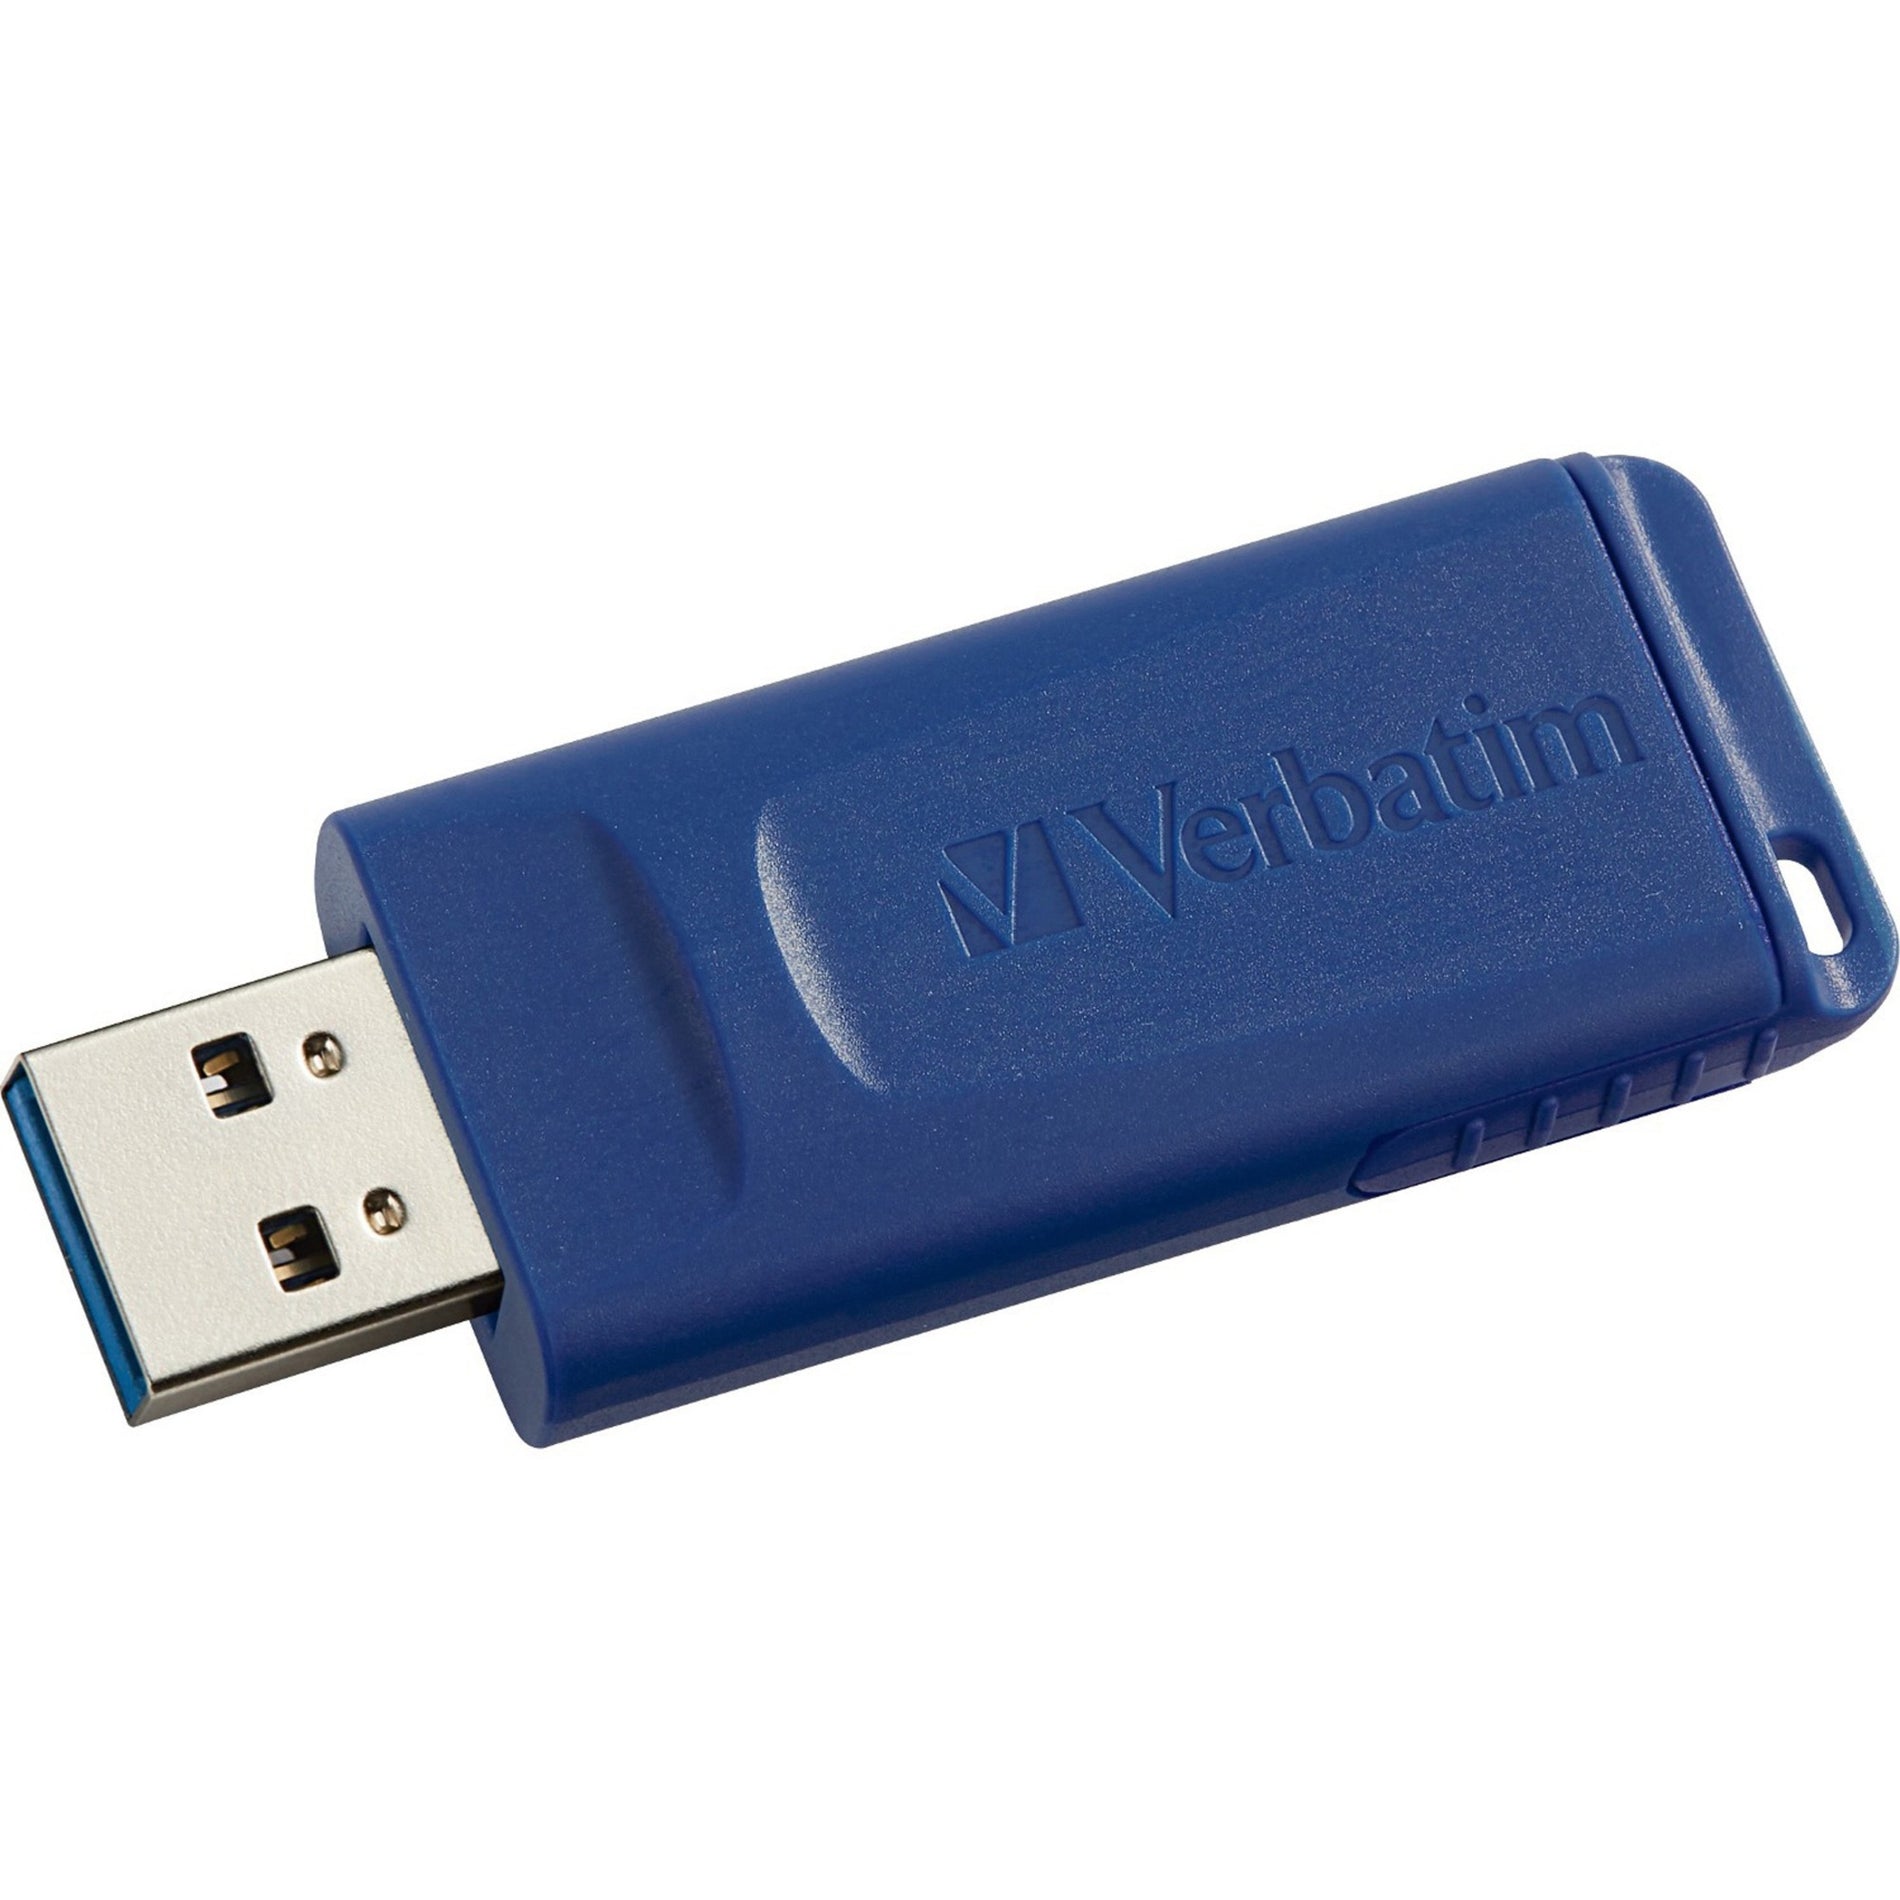 Microban 97408 32GB USB Flash Drive - Blue, Capless, Antimicrobial, Retractable